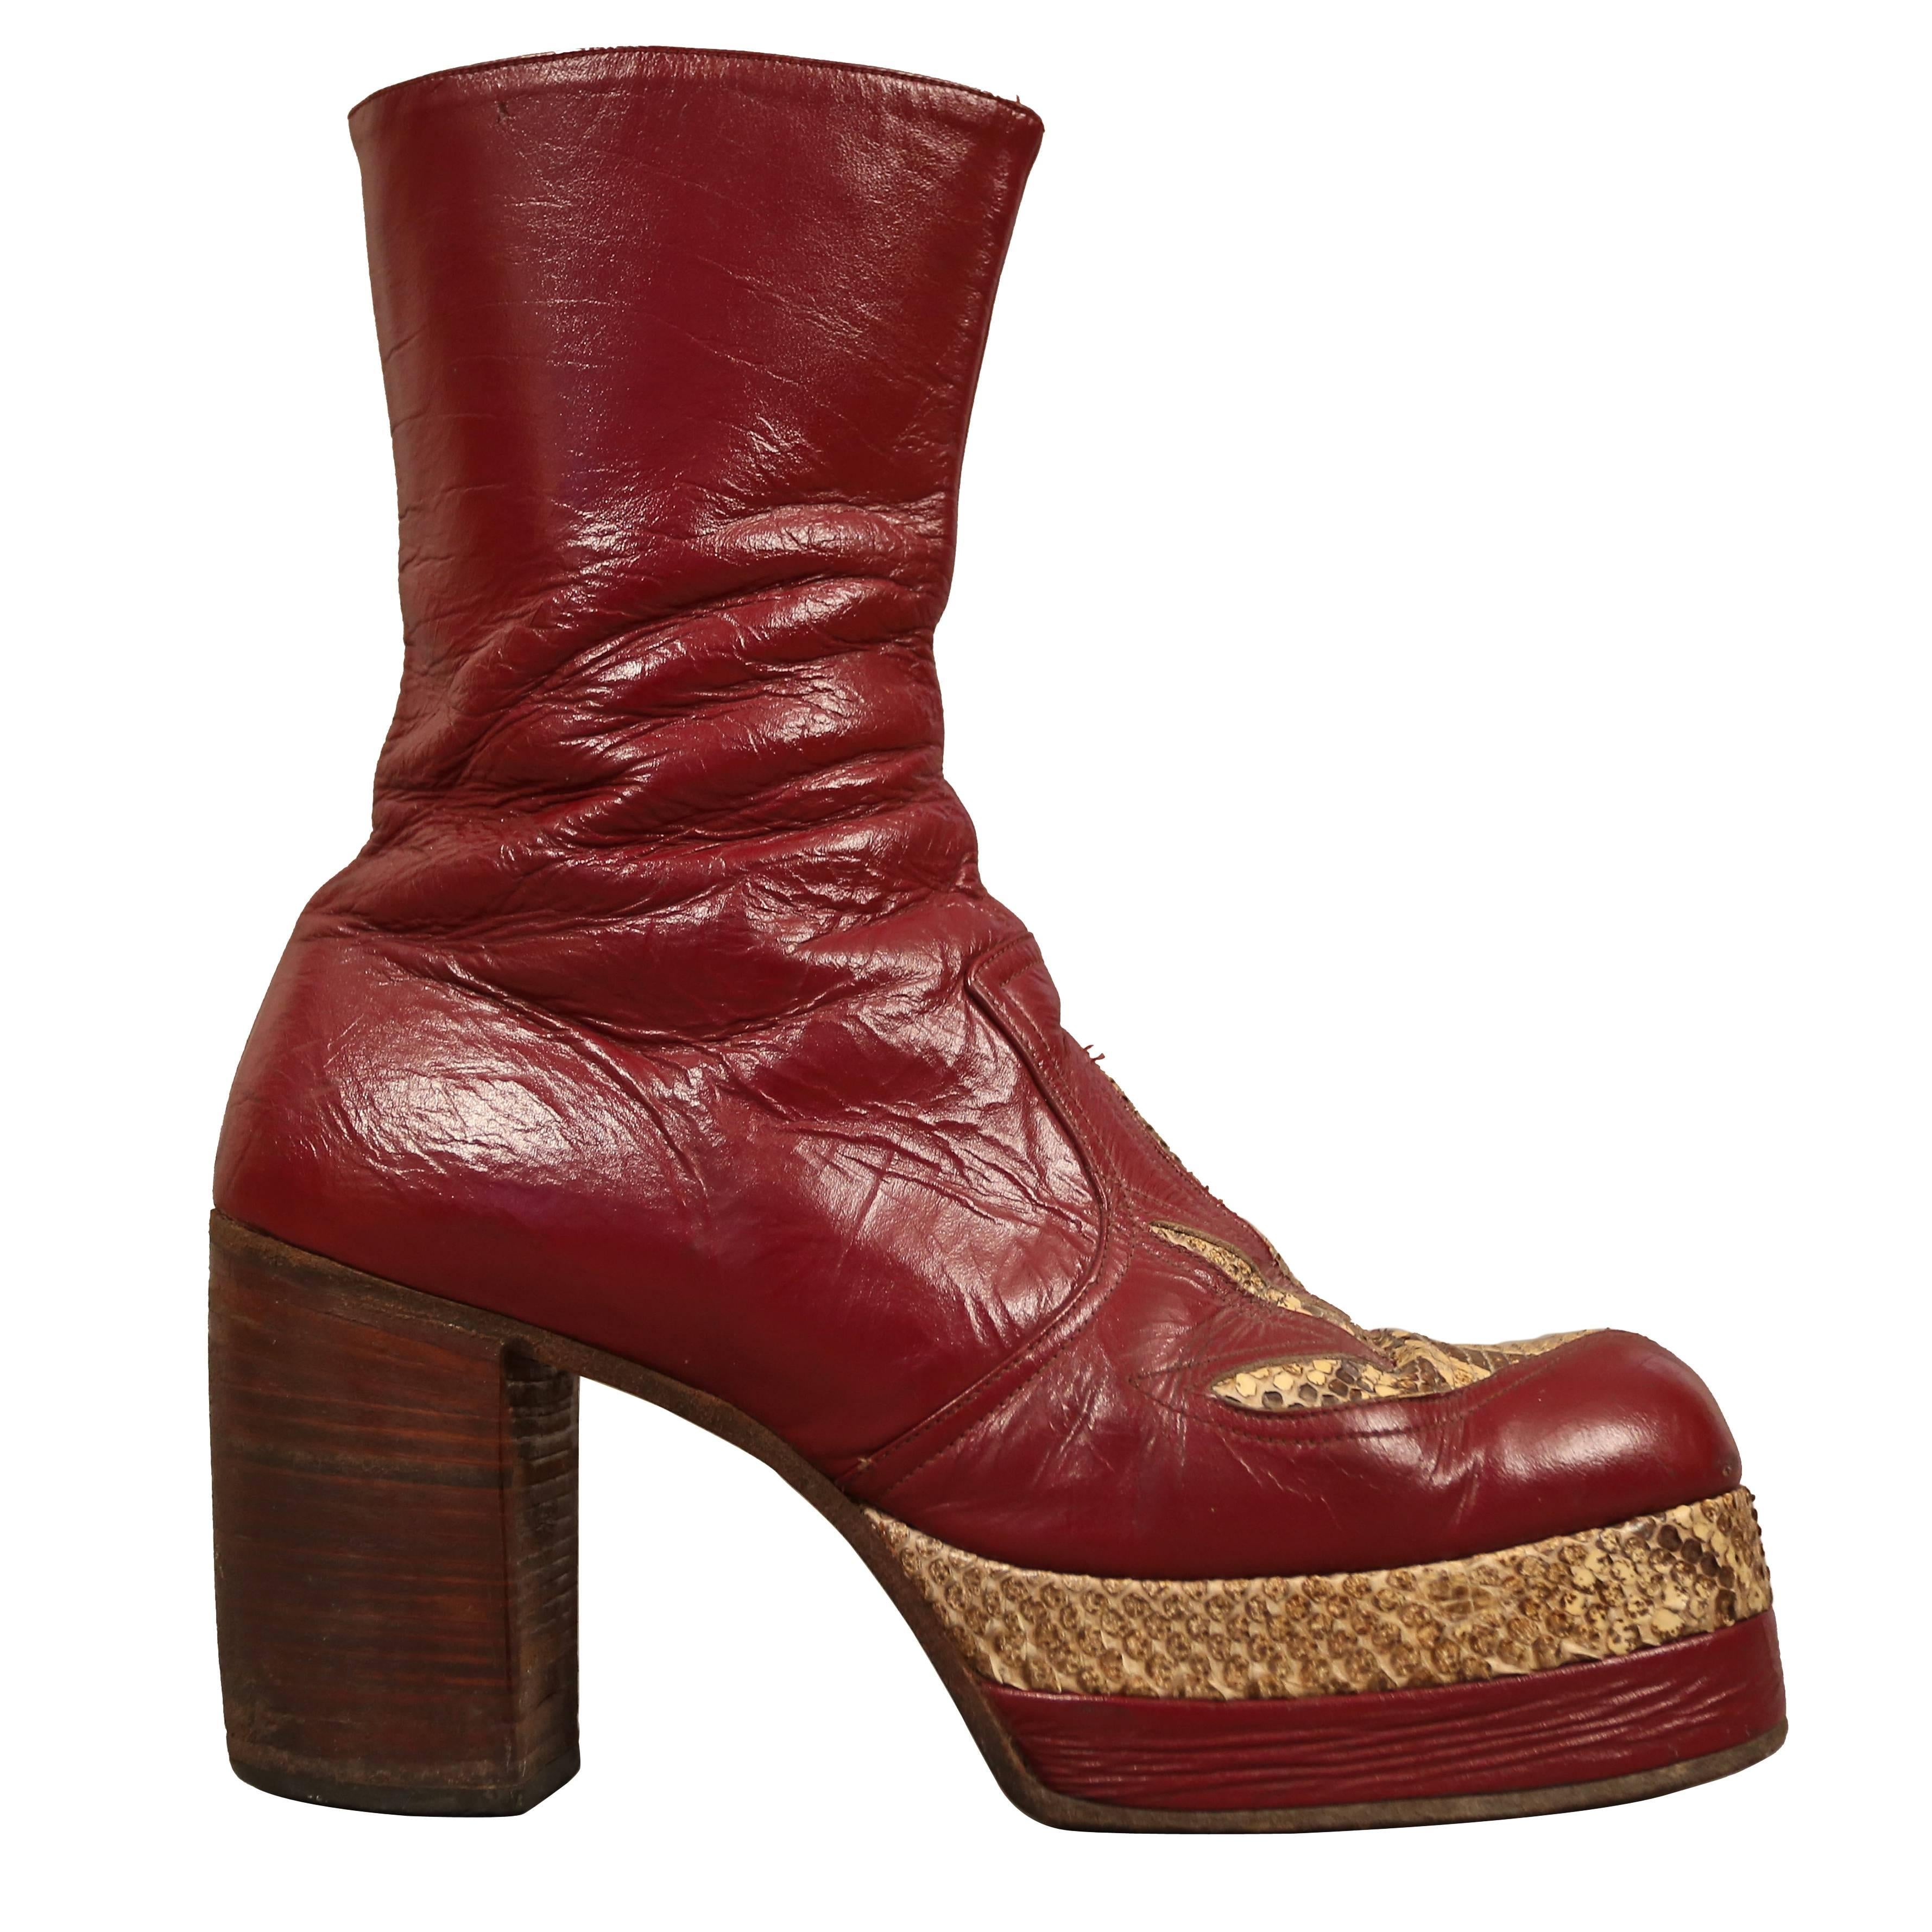 Mens burgundy leather platform boots with snakeskin, c. 1970 